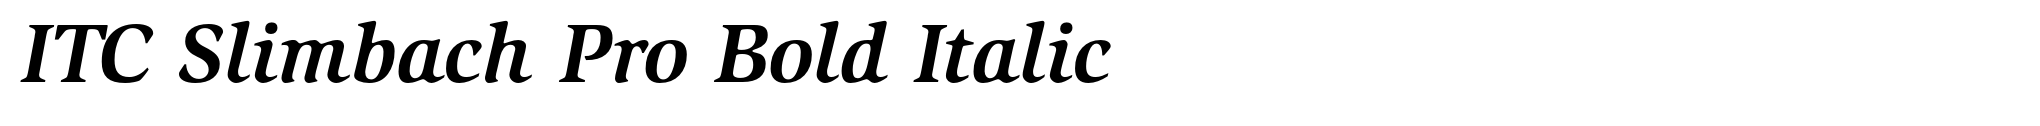 ITC Slimbach Pro Bold Italic image